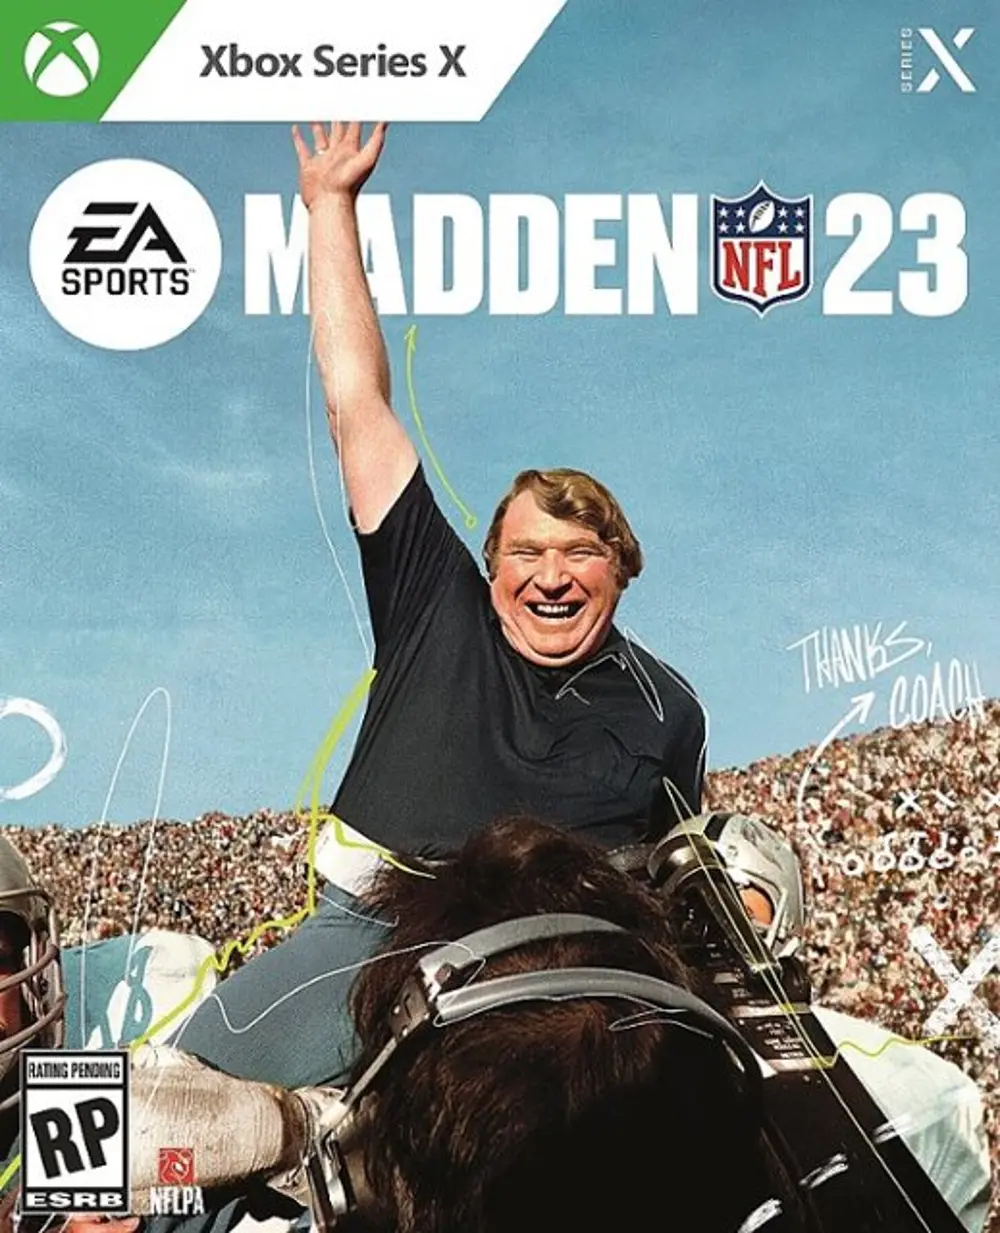 XBSX/MADDEN_NFL_23 Madden NFL 23 Standard Edition - Xbox Series X-1